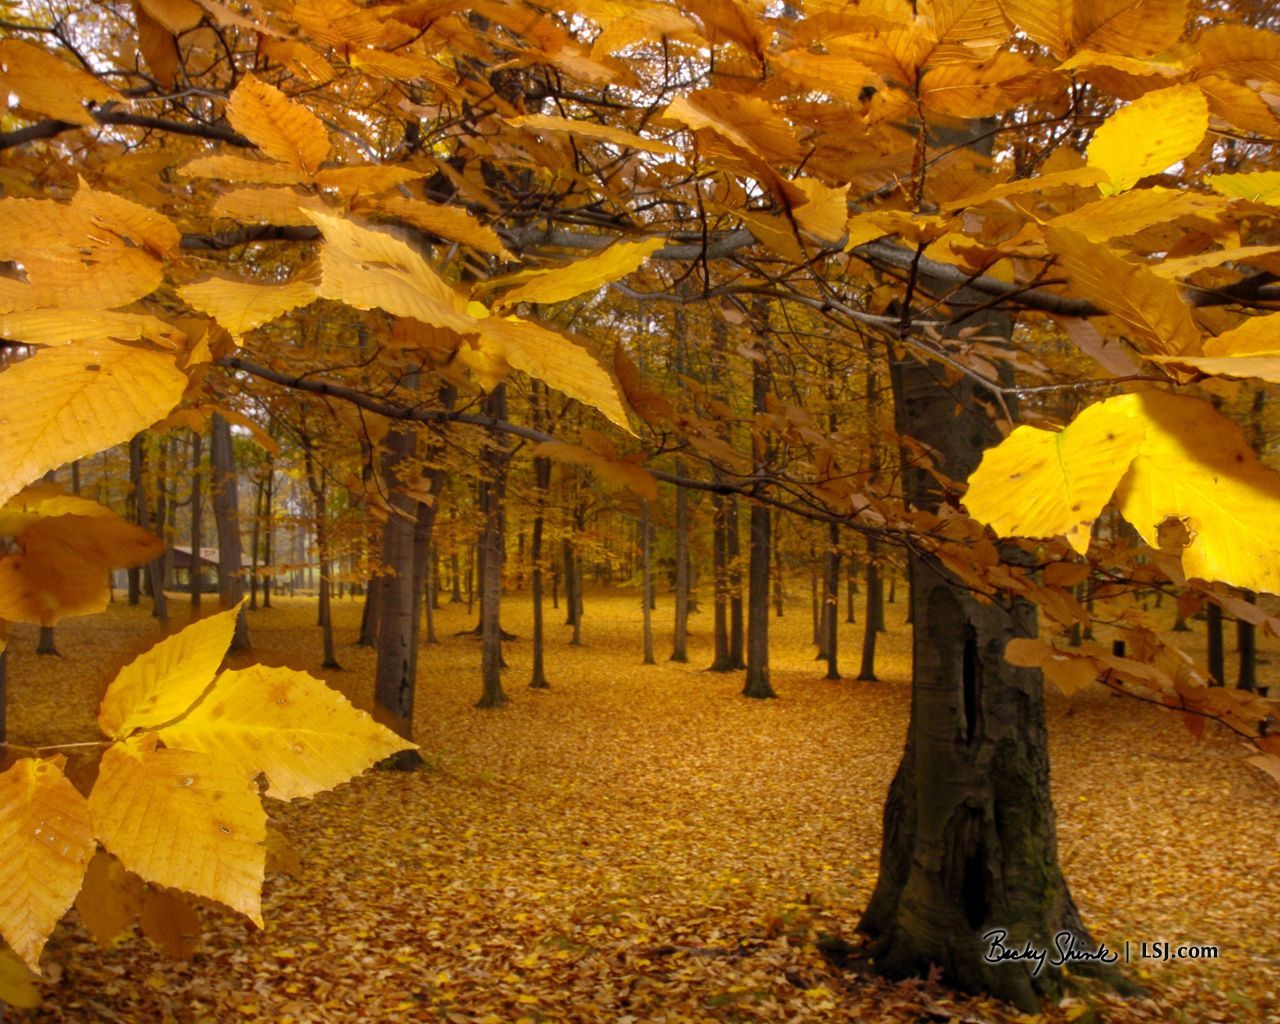 Autumn Wallpaper: Yellow Leaves. Autumn leaves wallpaper, Fall wallpaper, Autumn wallpaper hd